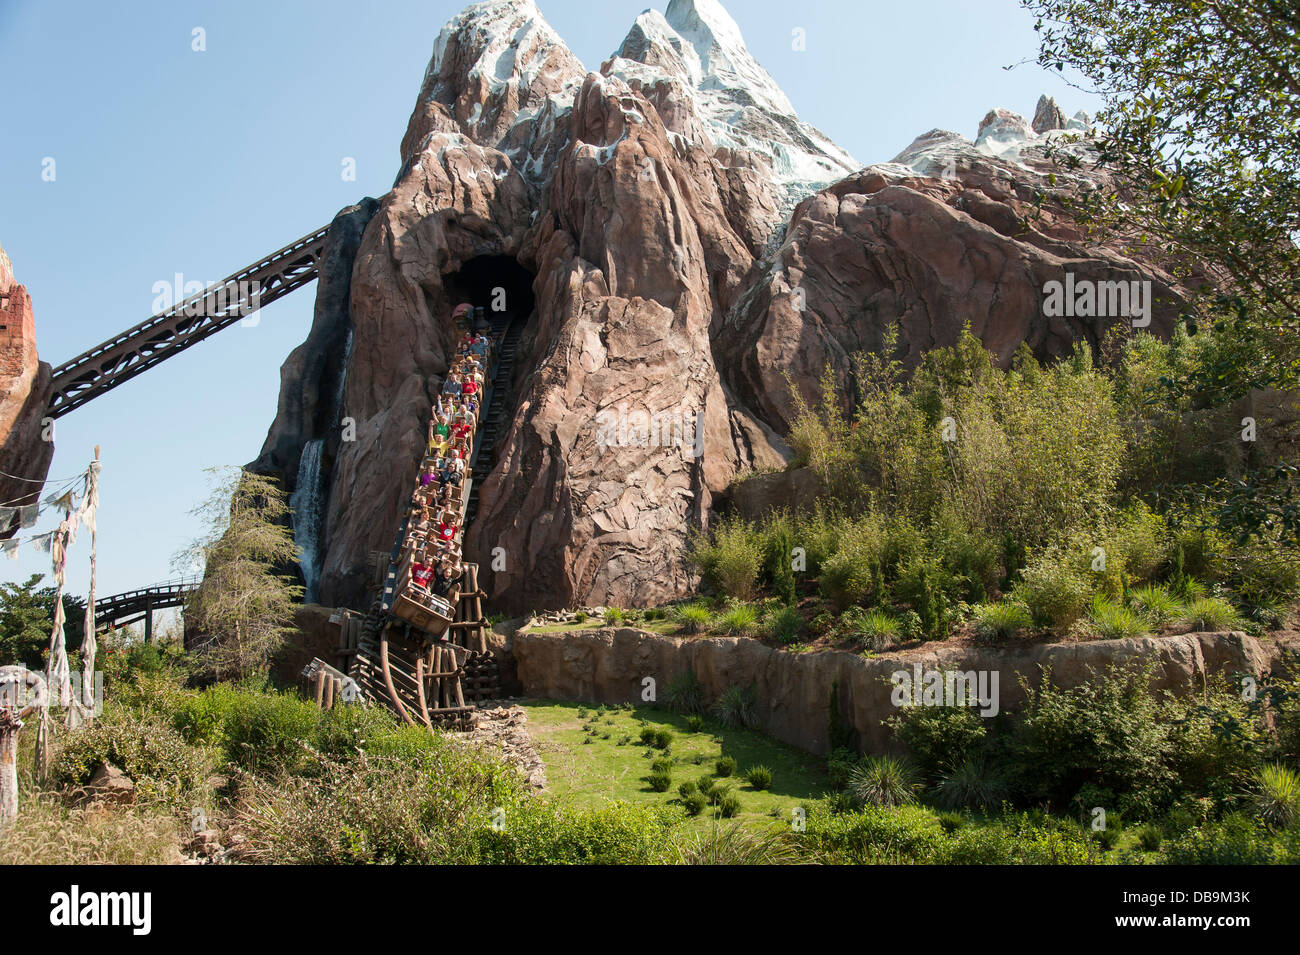 Expedition Everest roller coaster at Disney's Animal Kingdom at Walt Disney World Resort, Orlando, Florida Stock Photo